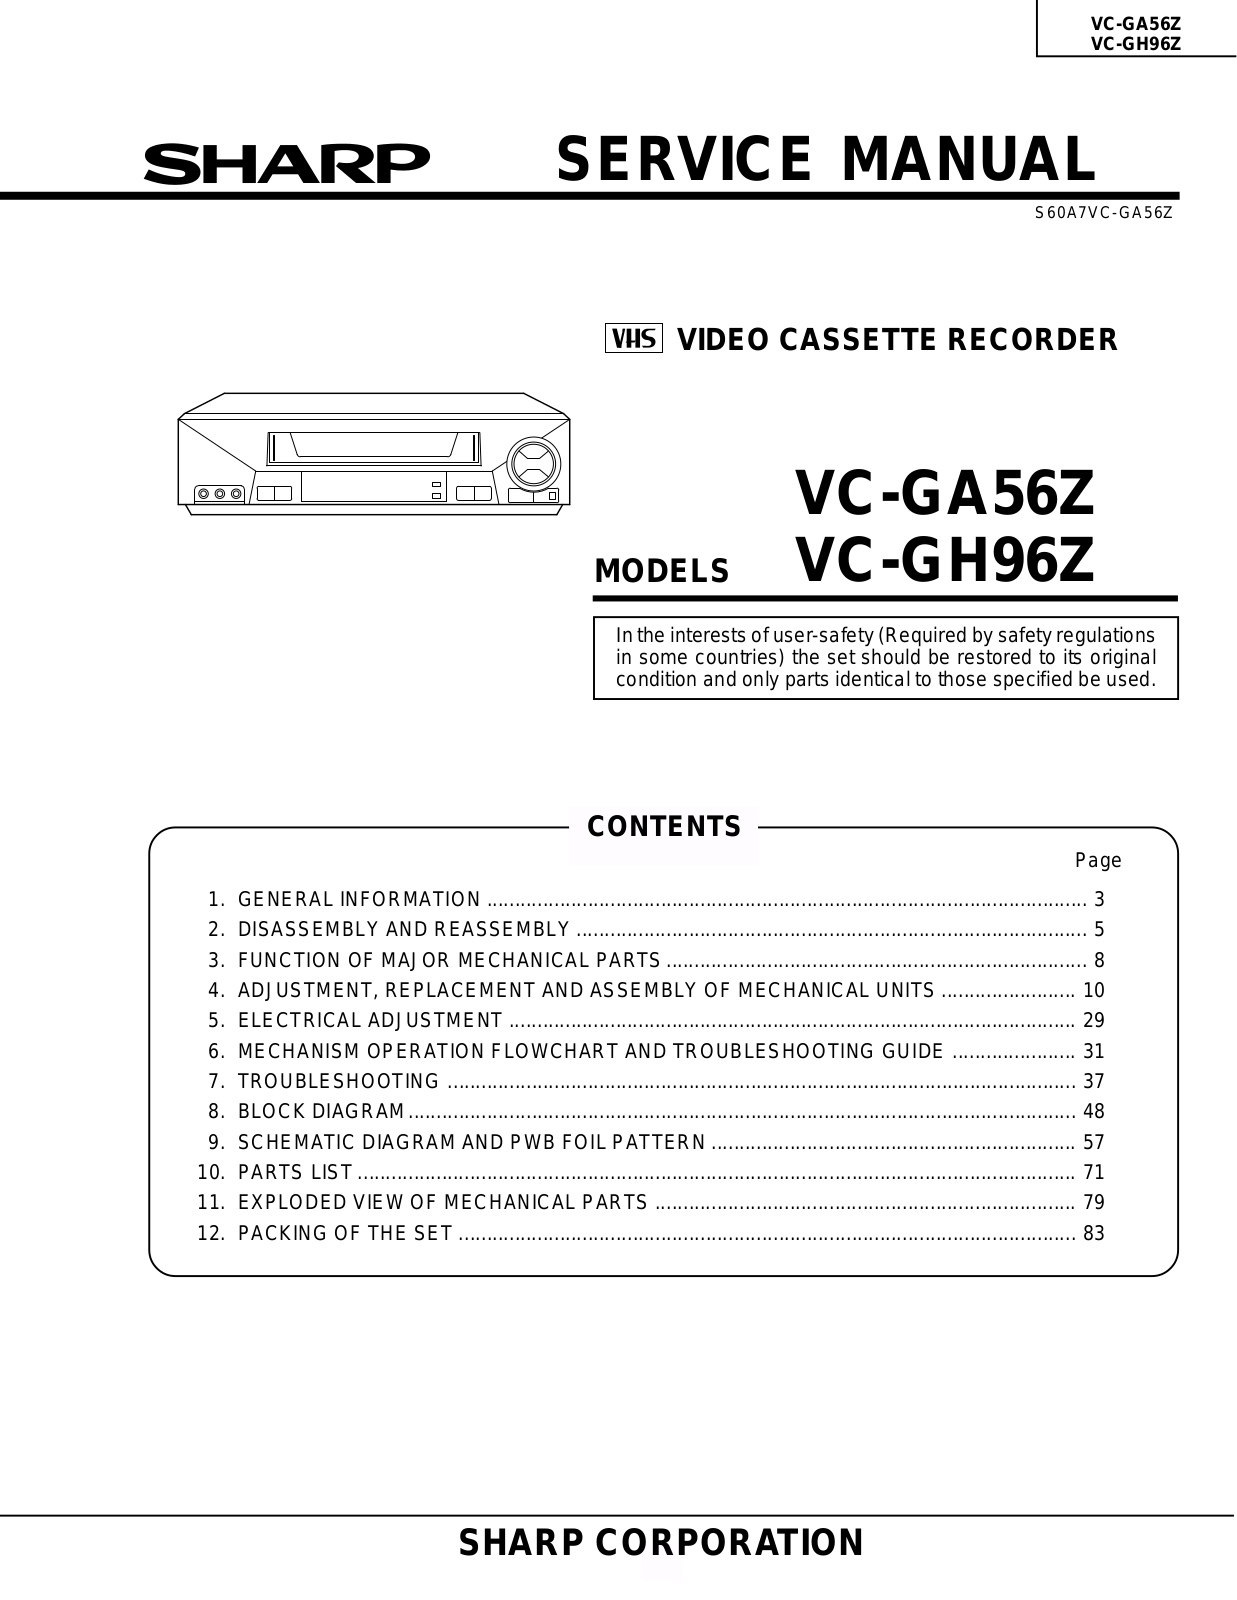 SHARP VC-GA56Z, VC-GH96Z Service Manual